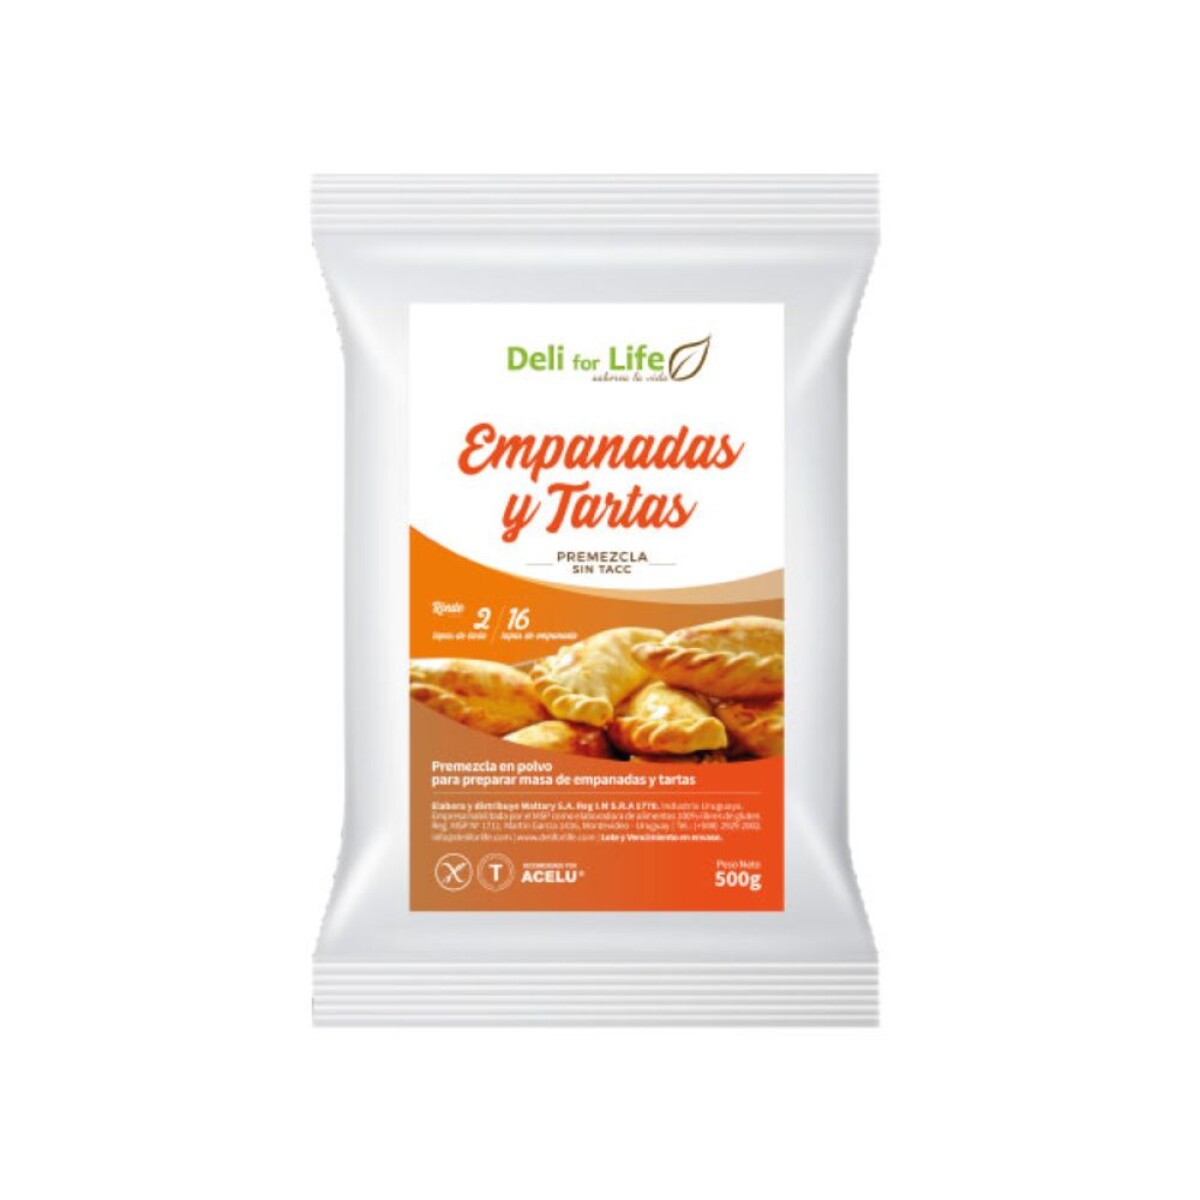 Pre-Mezcla Empanadas y Tartas Deli for Life 500g 